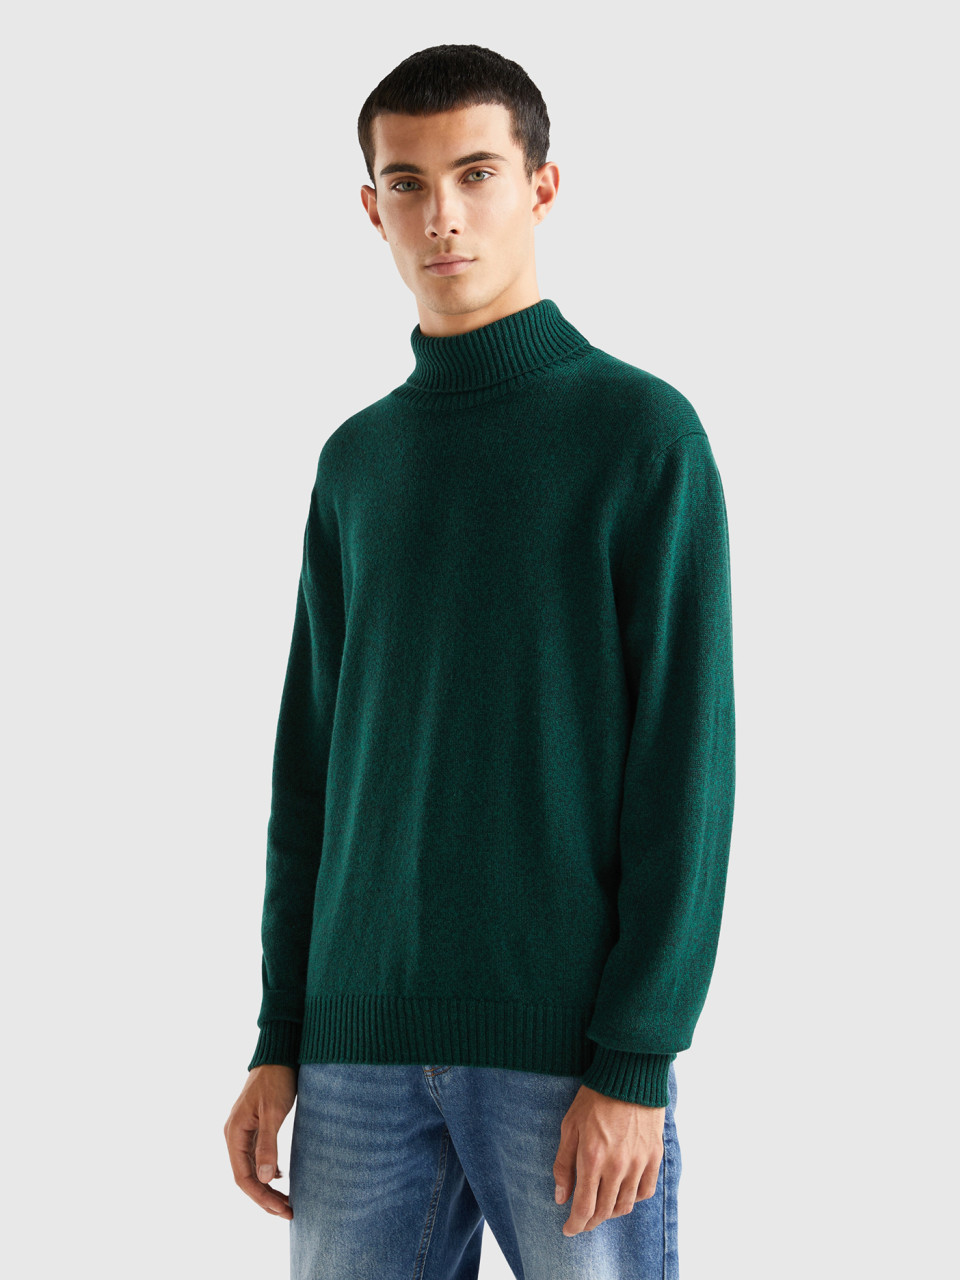 Benetton, Turtleneck Sweater In Cashmere And Wool Blend, Dark Green, Men